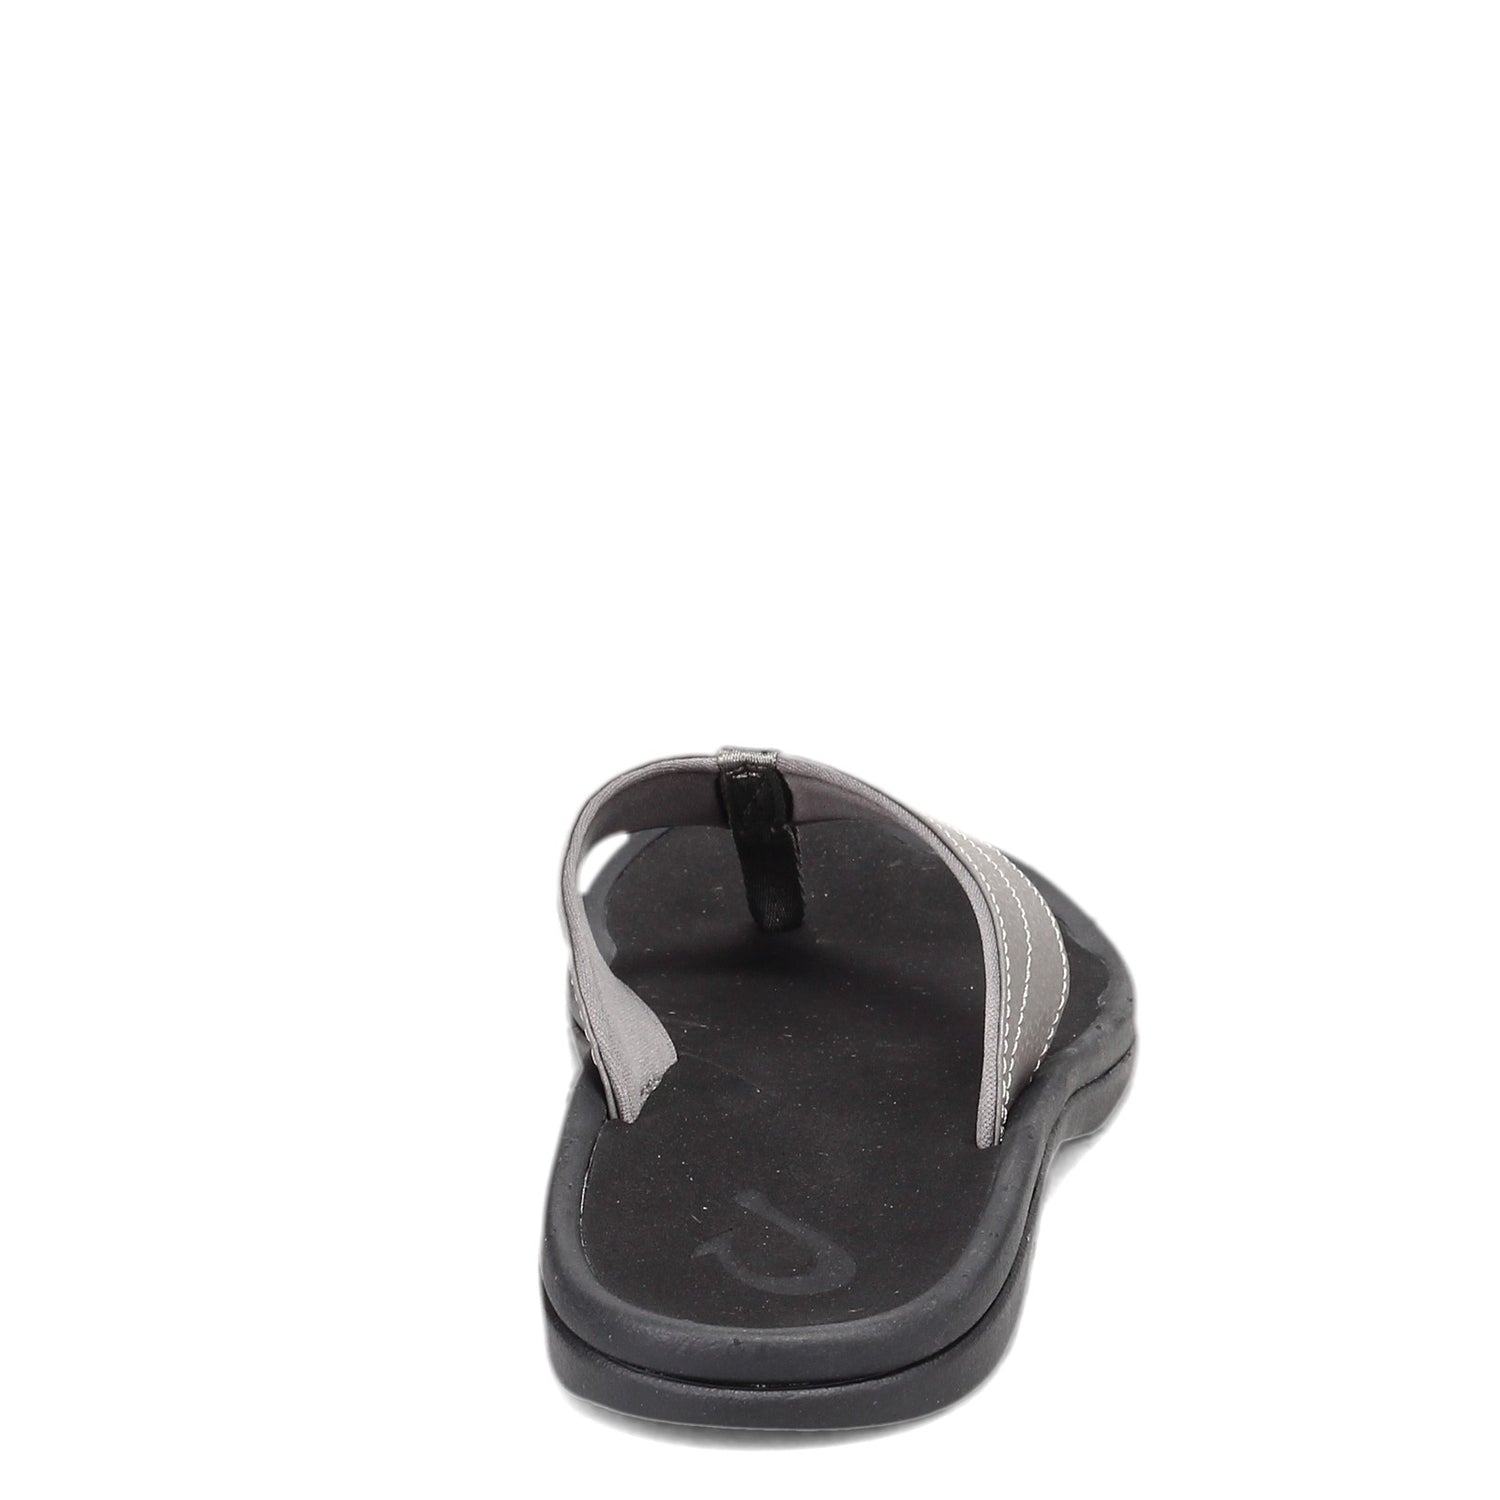 OLUKAI Ohana Black Synthetic Thong Women's Flipflops Sandals Sz 9